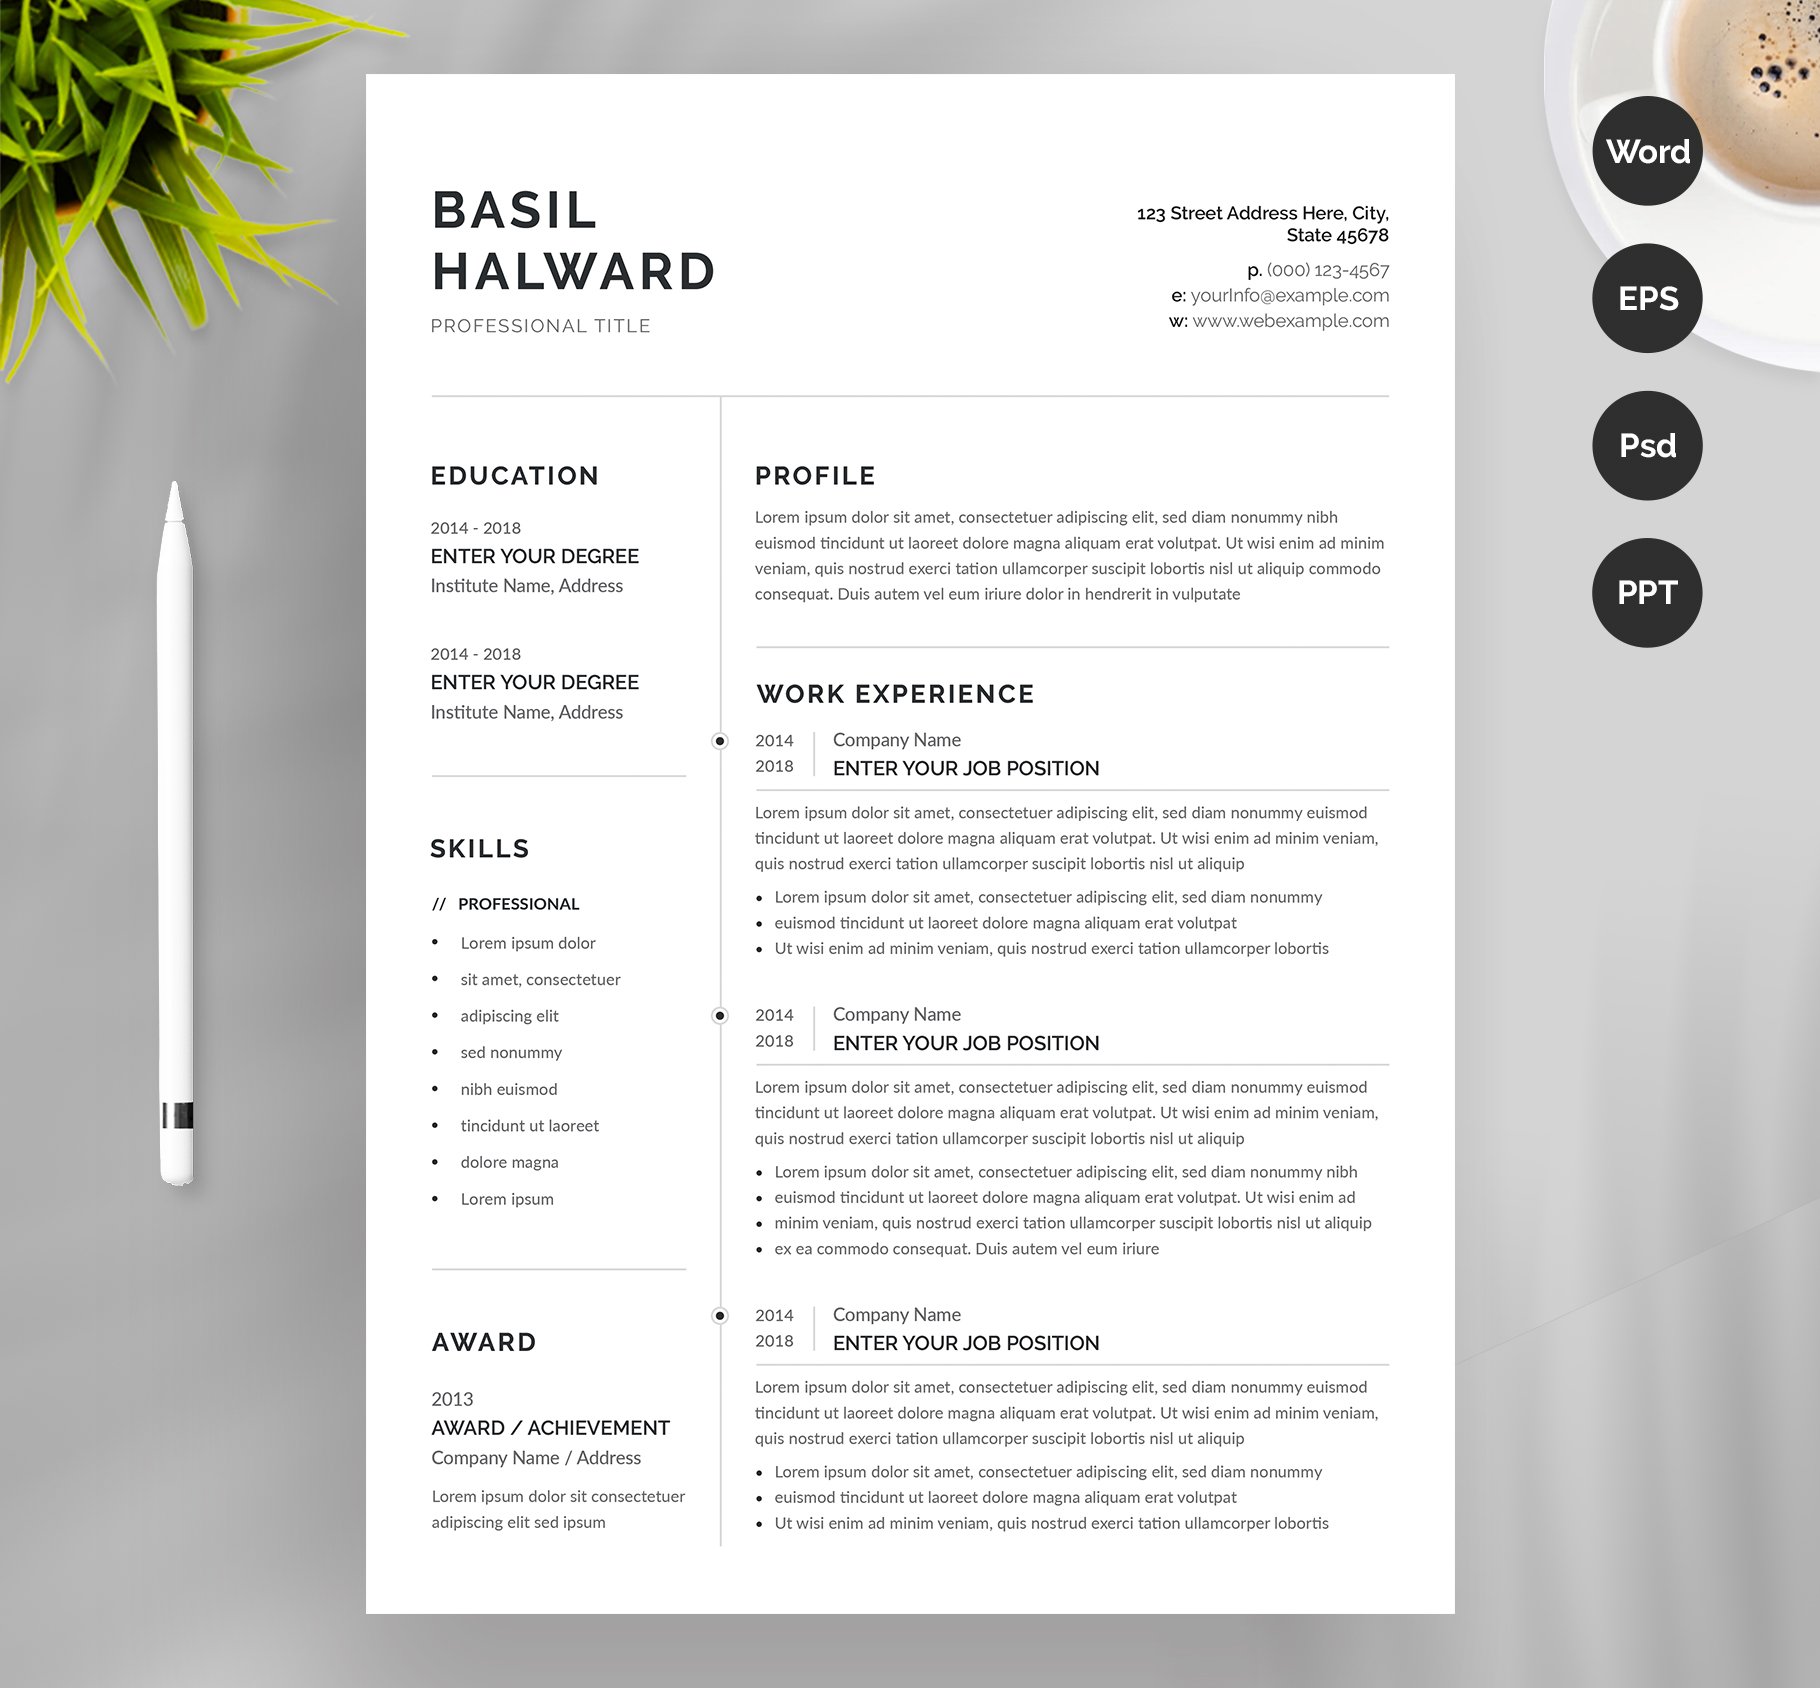 Minimalist Resume / CV cover image.